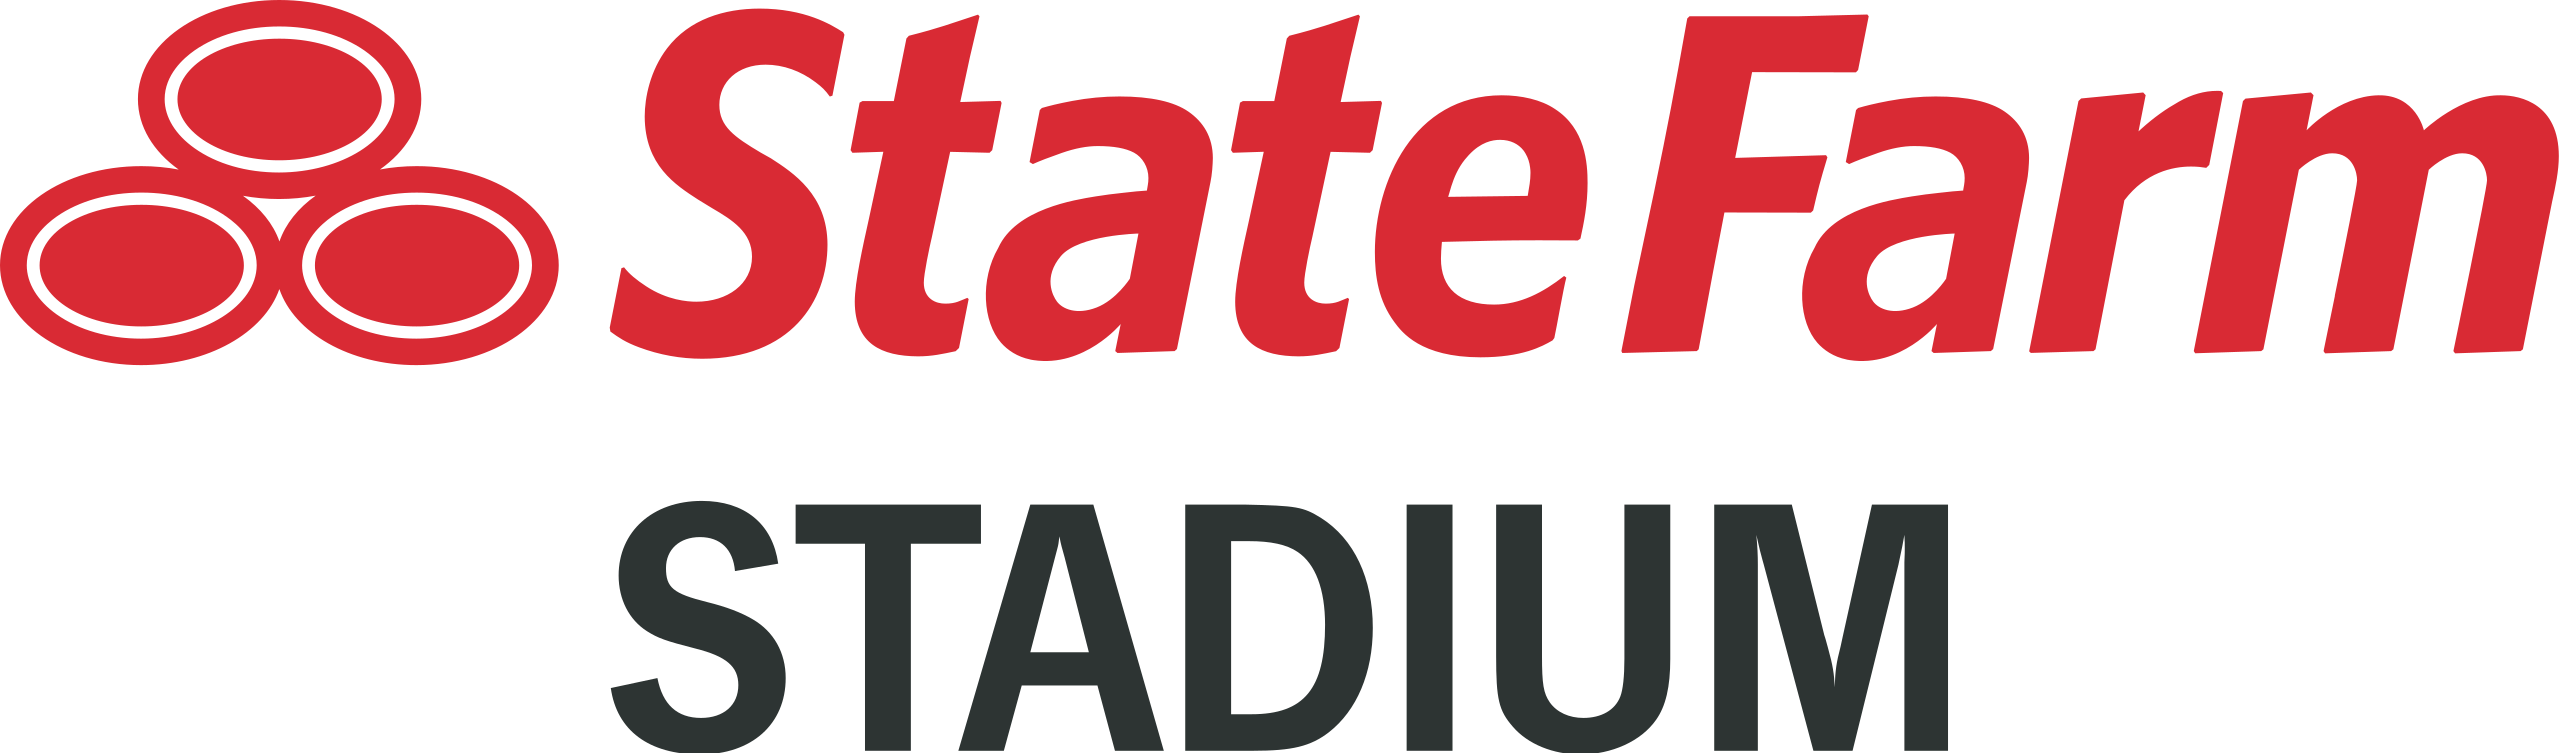 State Farm Stadium Show PleasureWay Industries